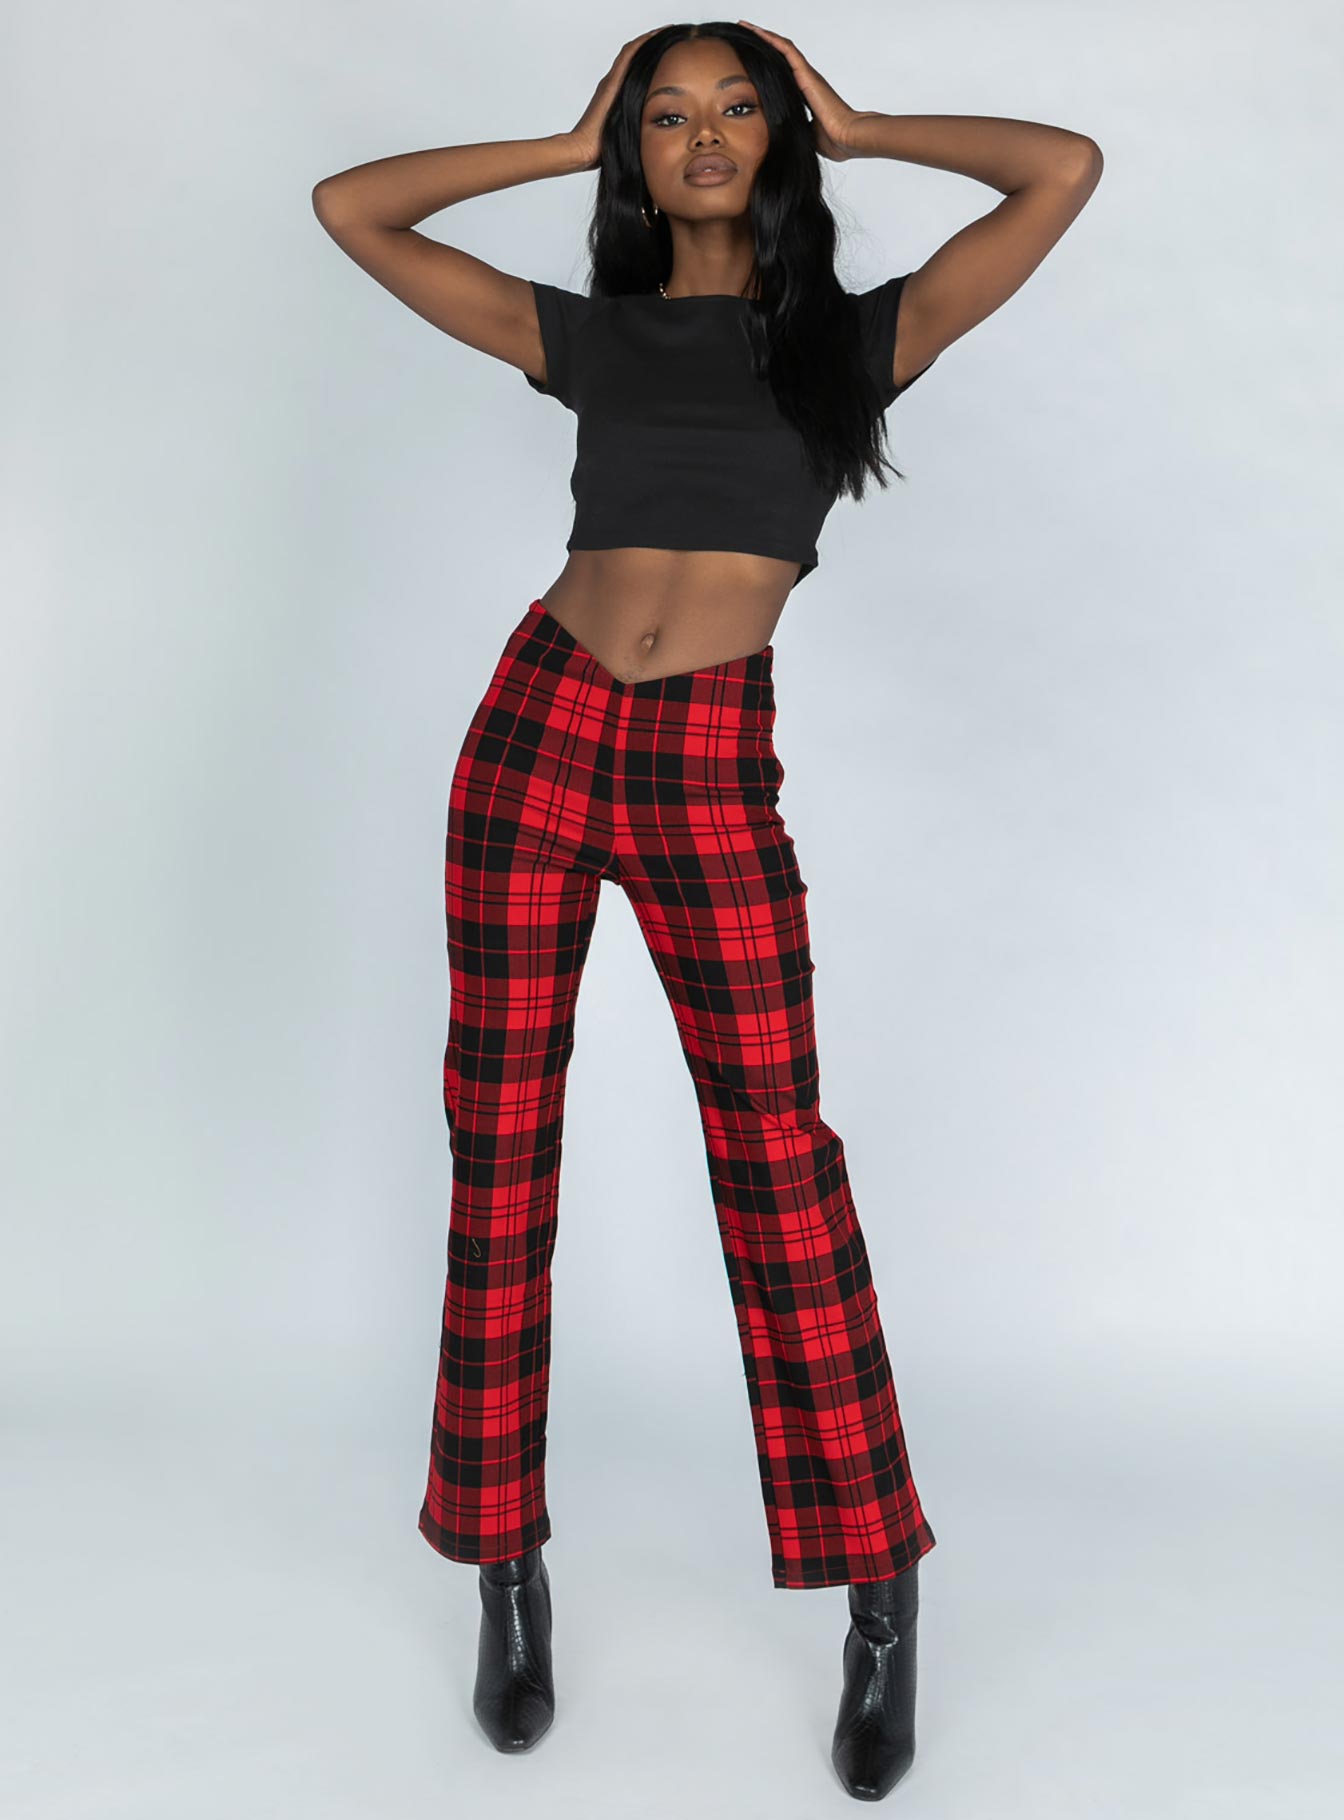 Zara Zippered HIGH RISE LEGGINGS SKINNY Pants Red Plaid Size XS | eBay